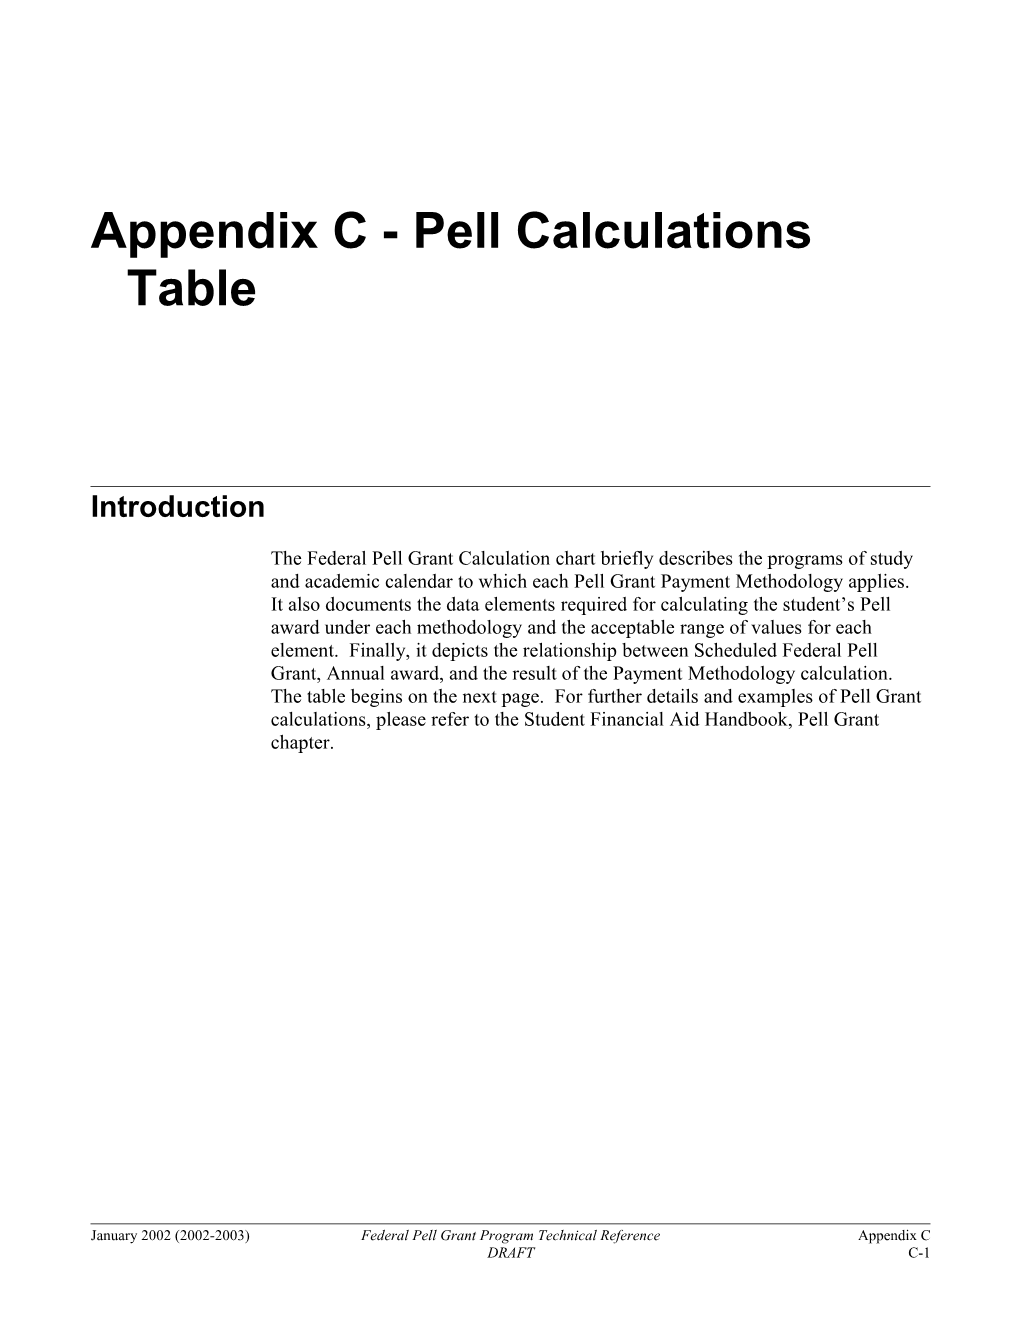 Appendix H Pell Calculations Table